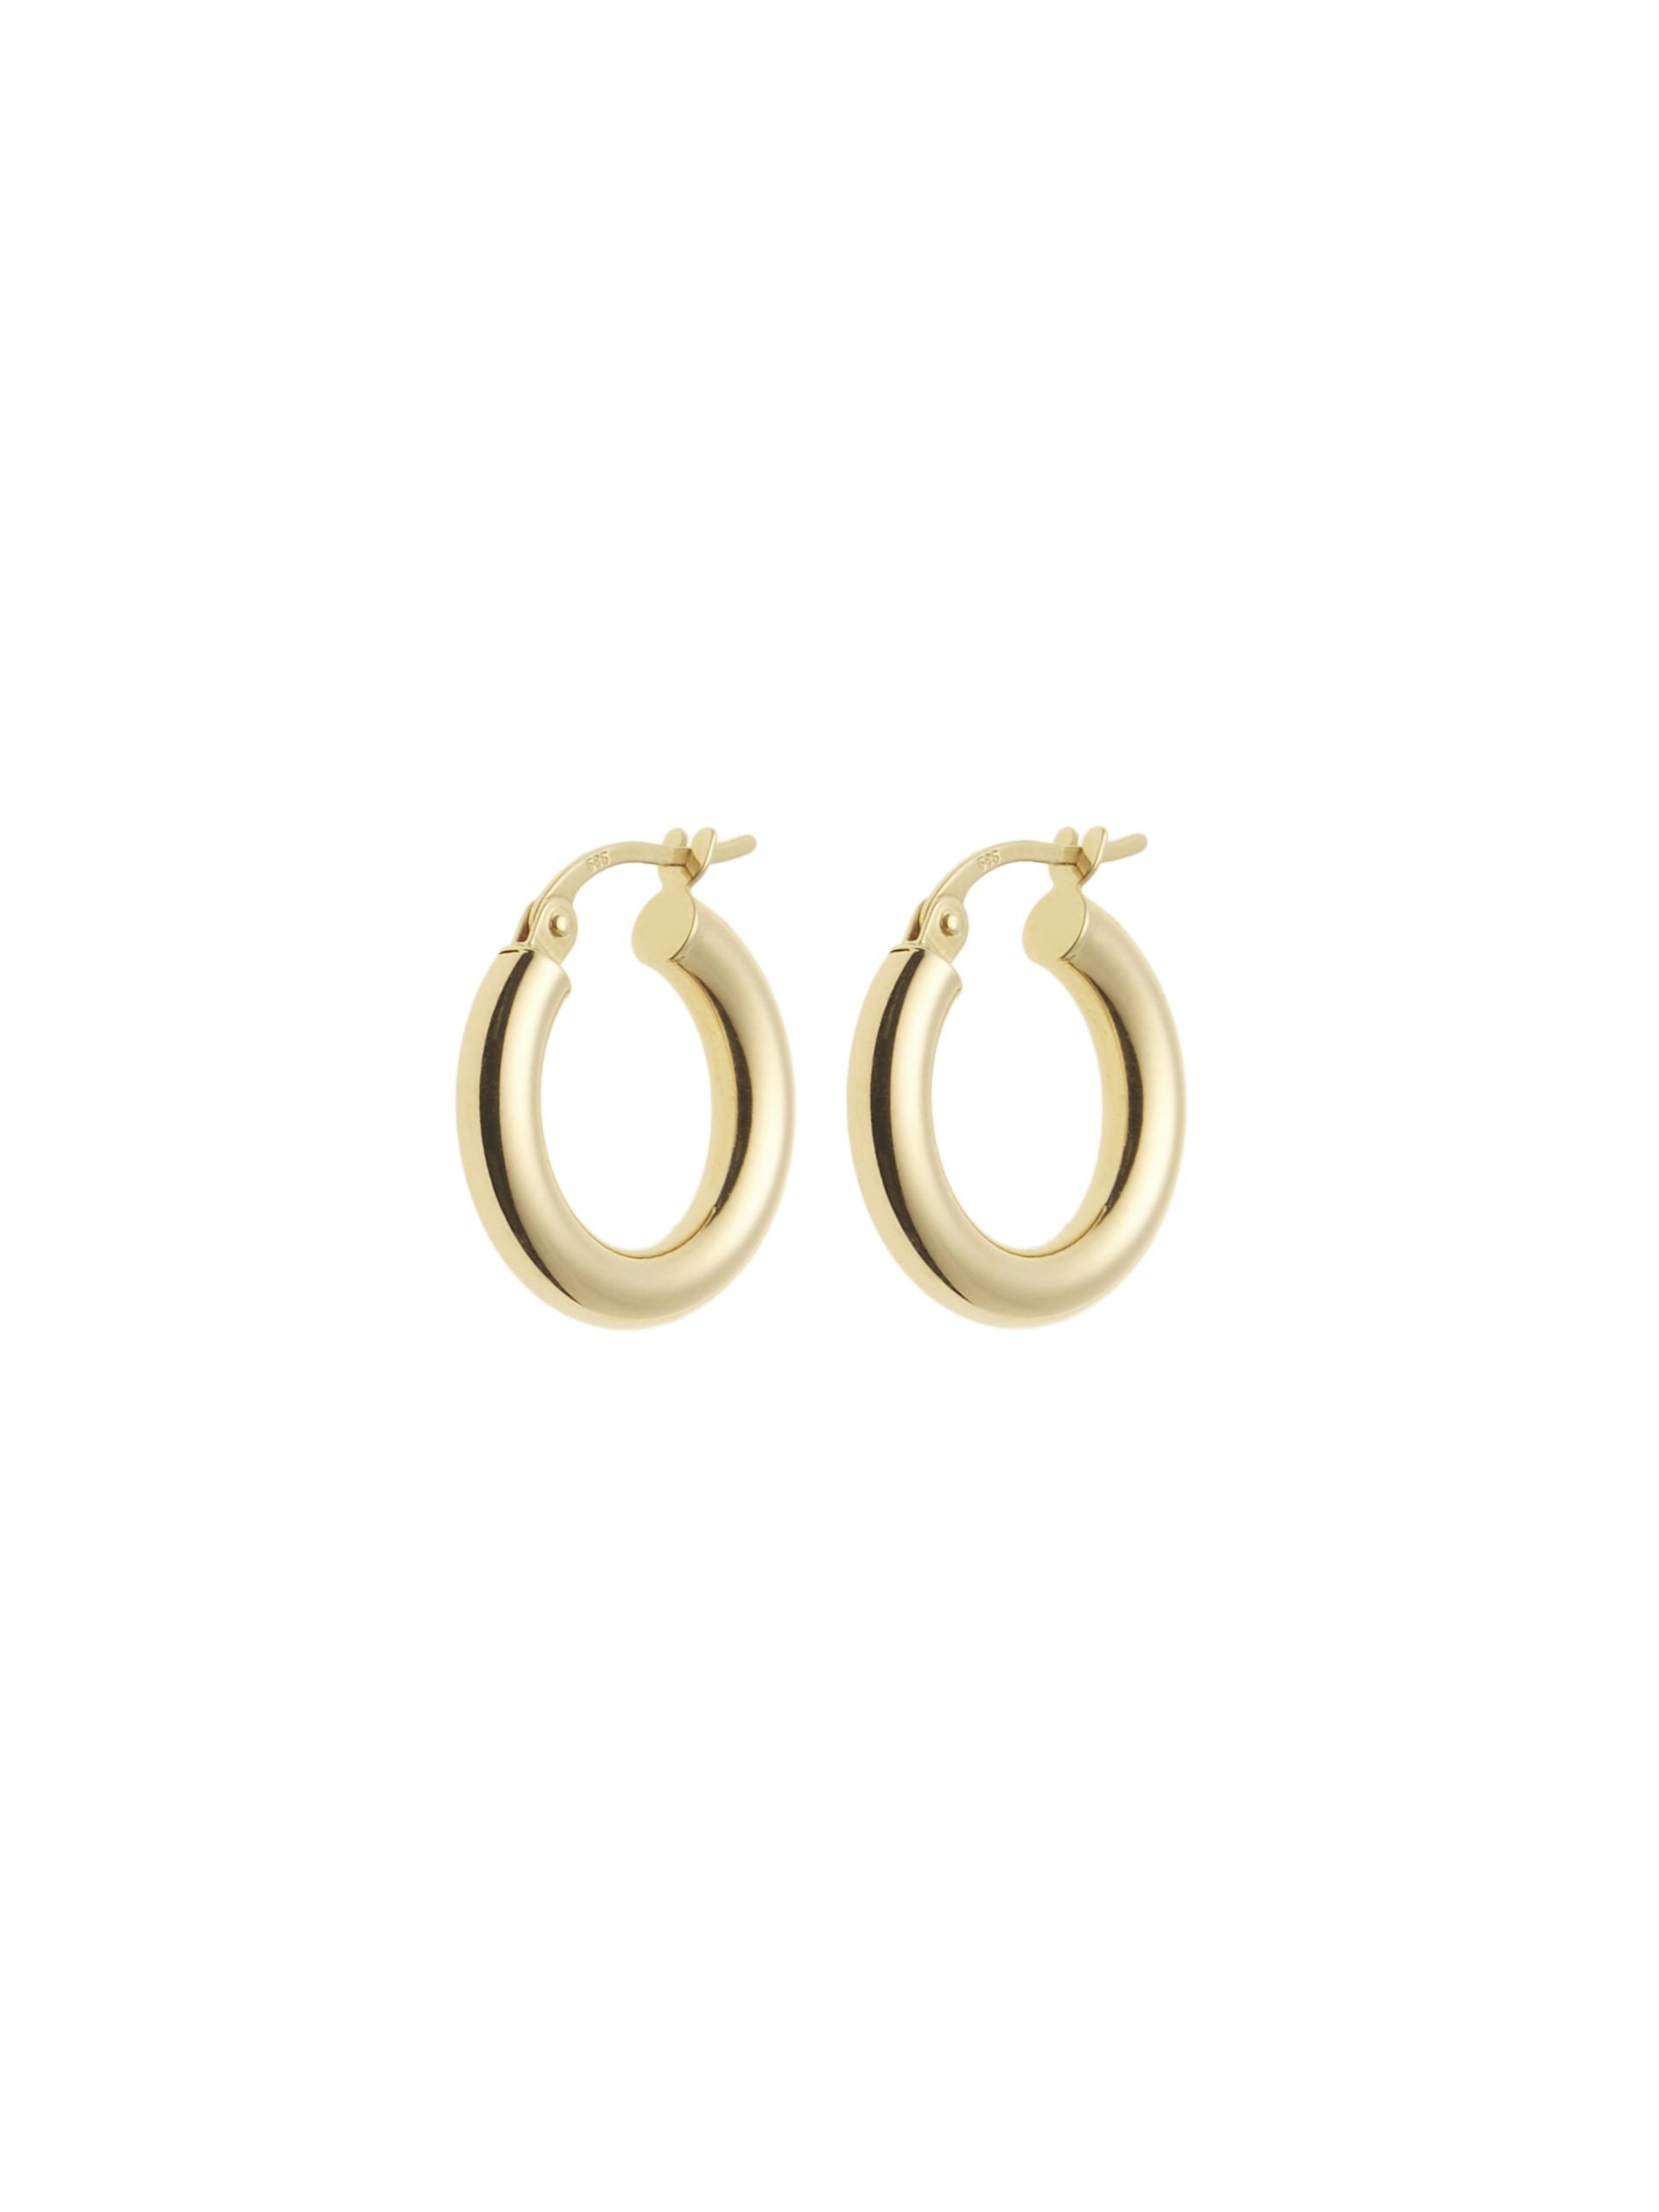 Lightweight Gold Round Hoop Earrings 14ct gold - 16mm